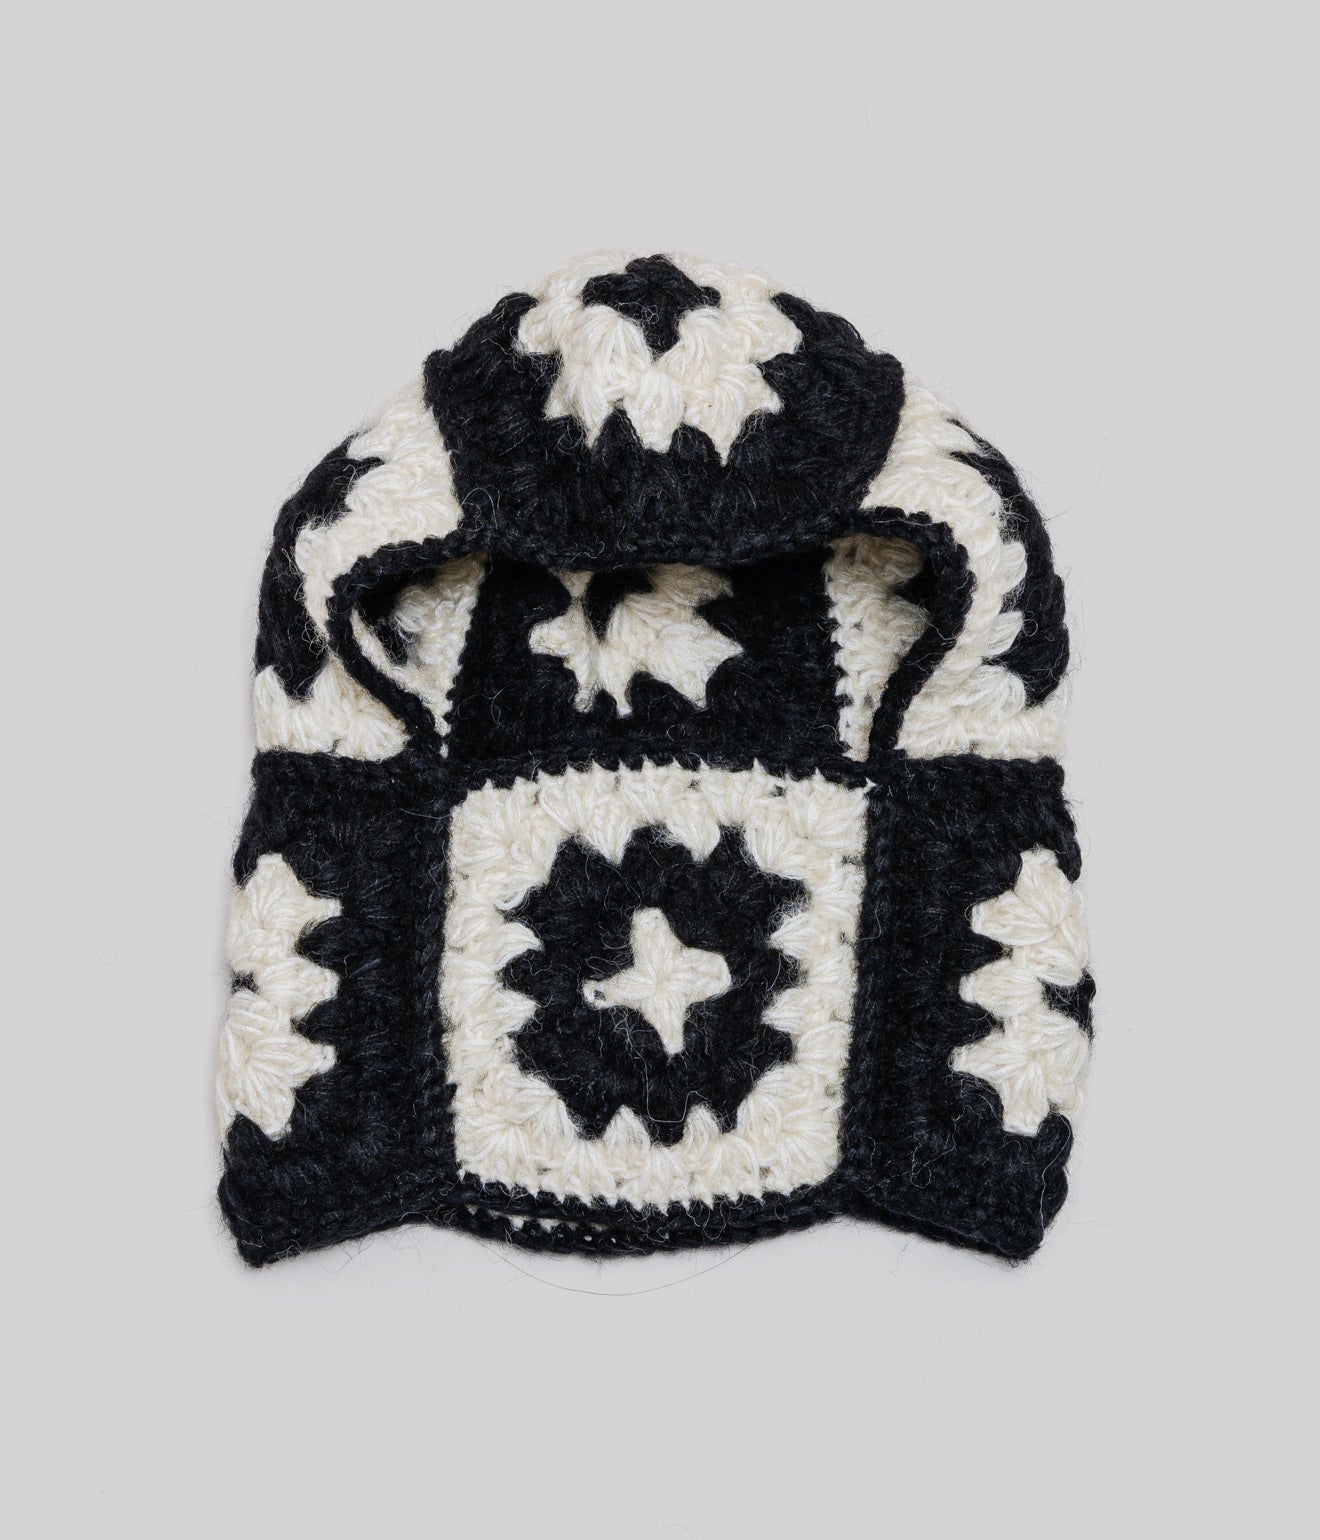 MacMahon Knitting Mills "Balaclava-Crochet" Black/White - WEAREALLANIMALS